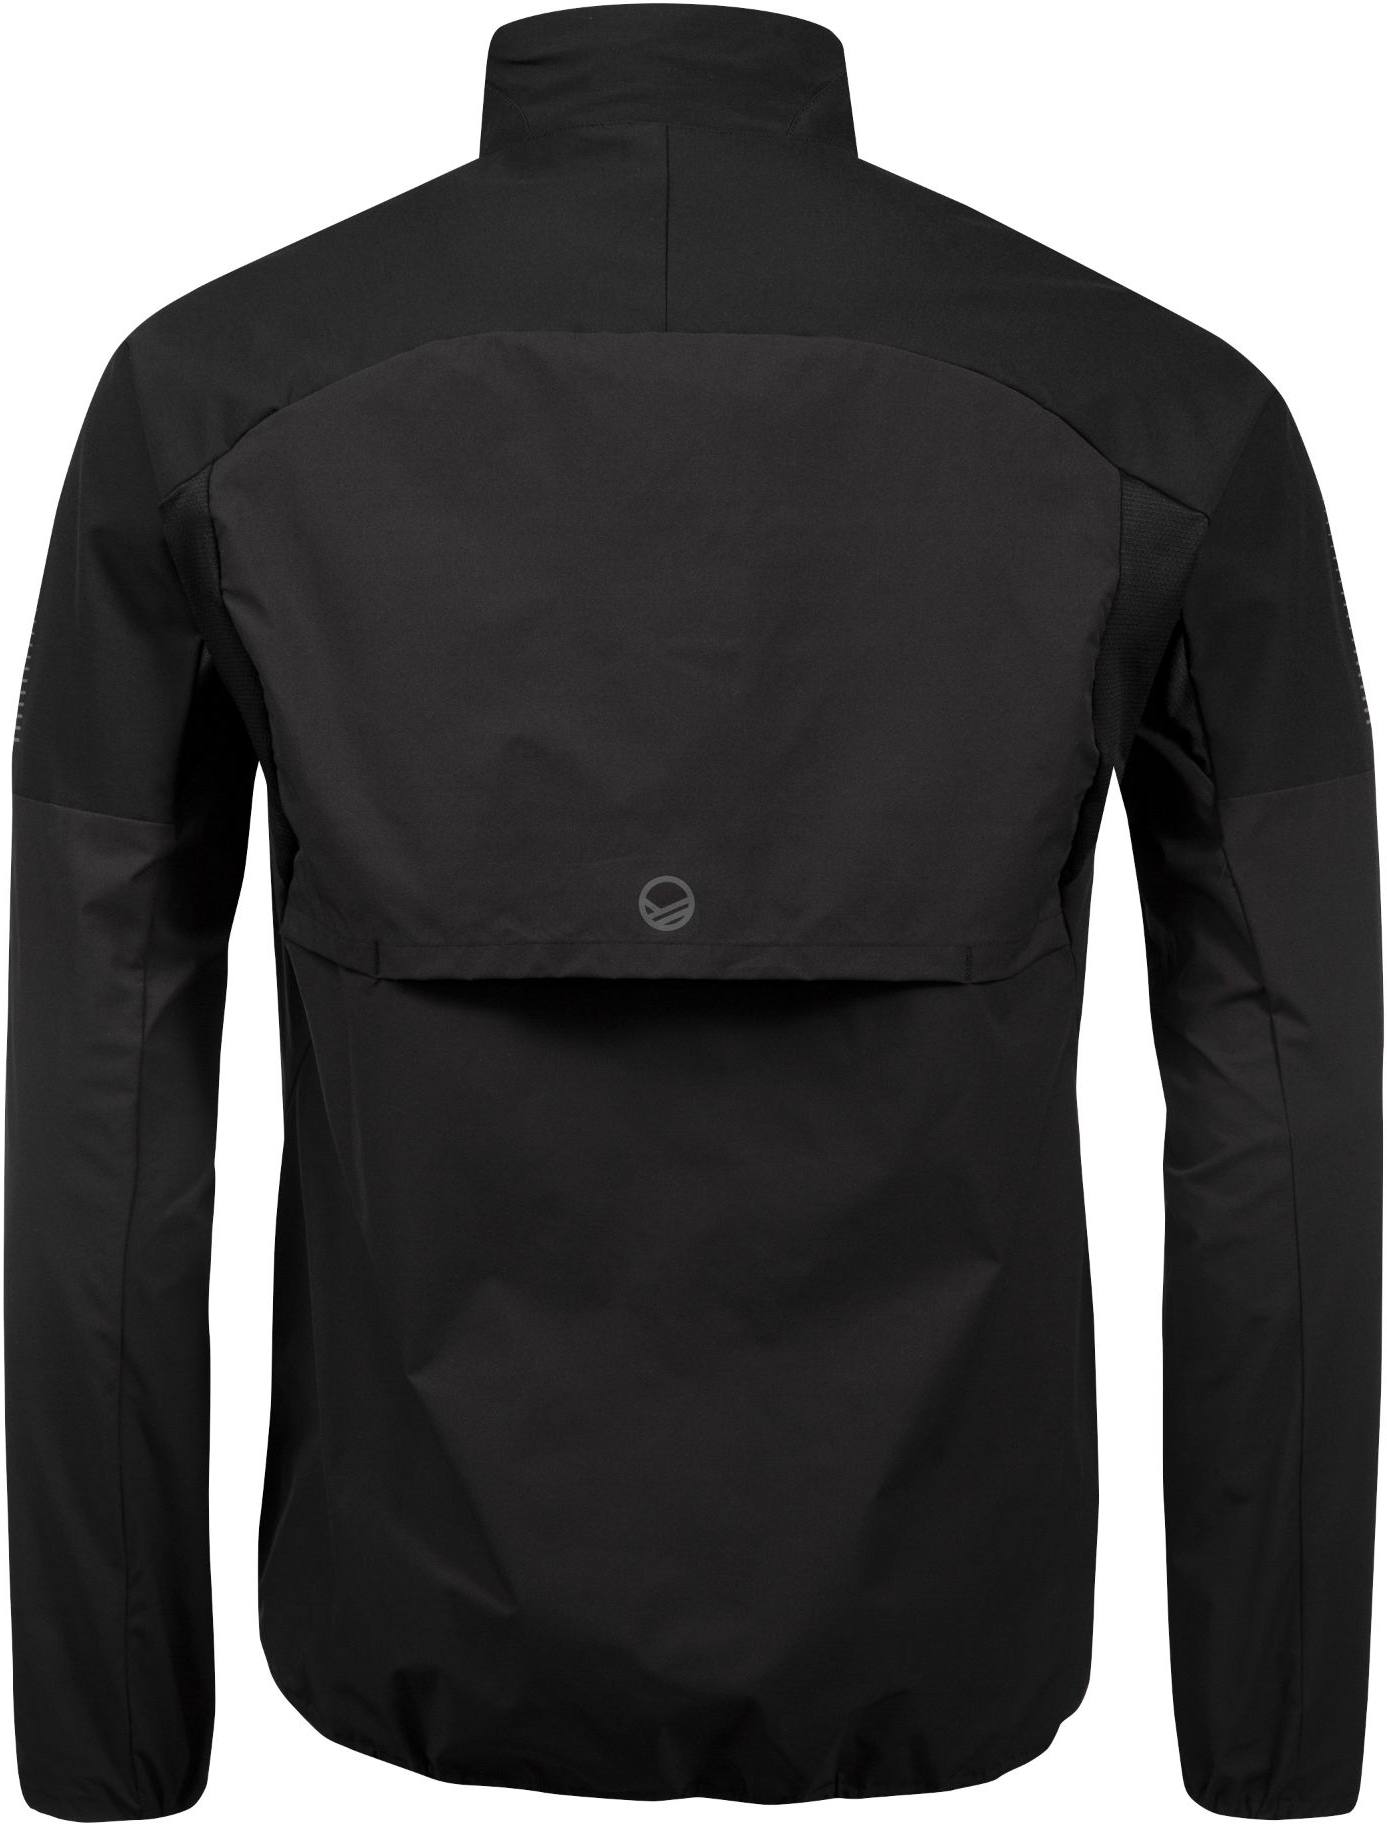 Halti Men’s Urbanite Training Jacket Black XL